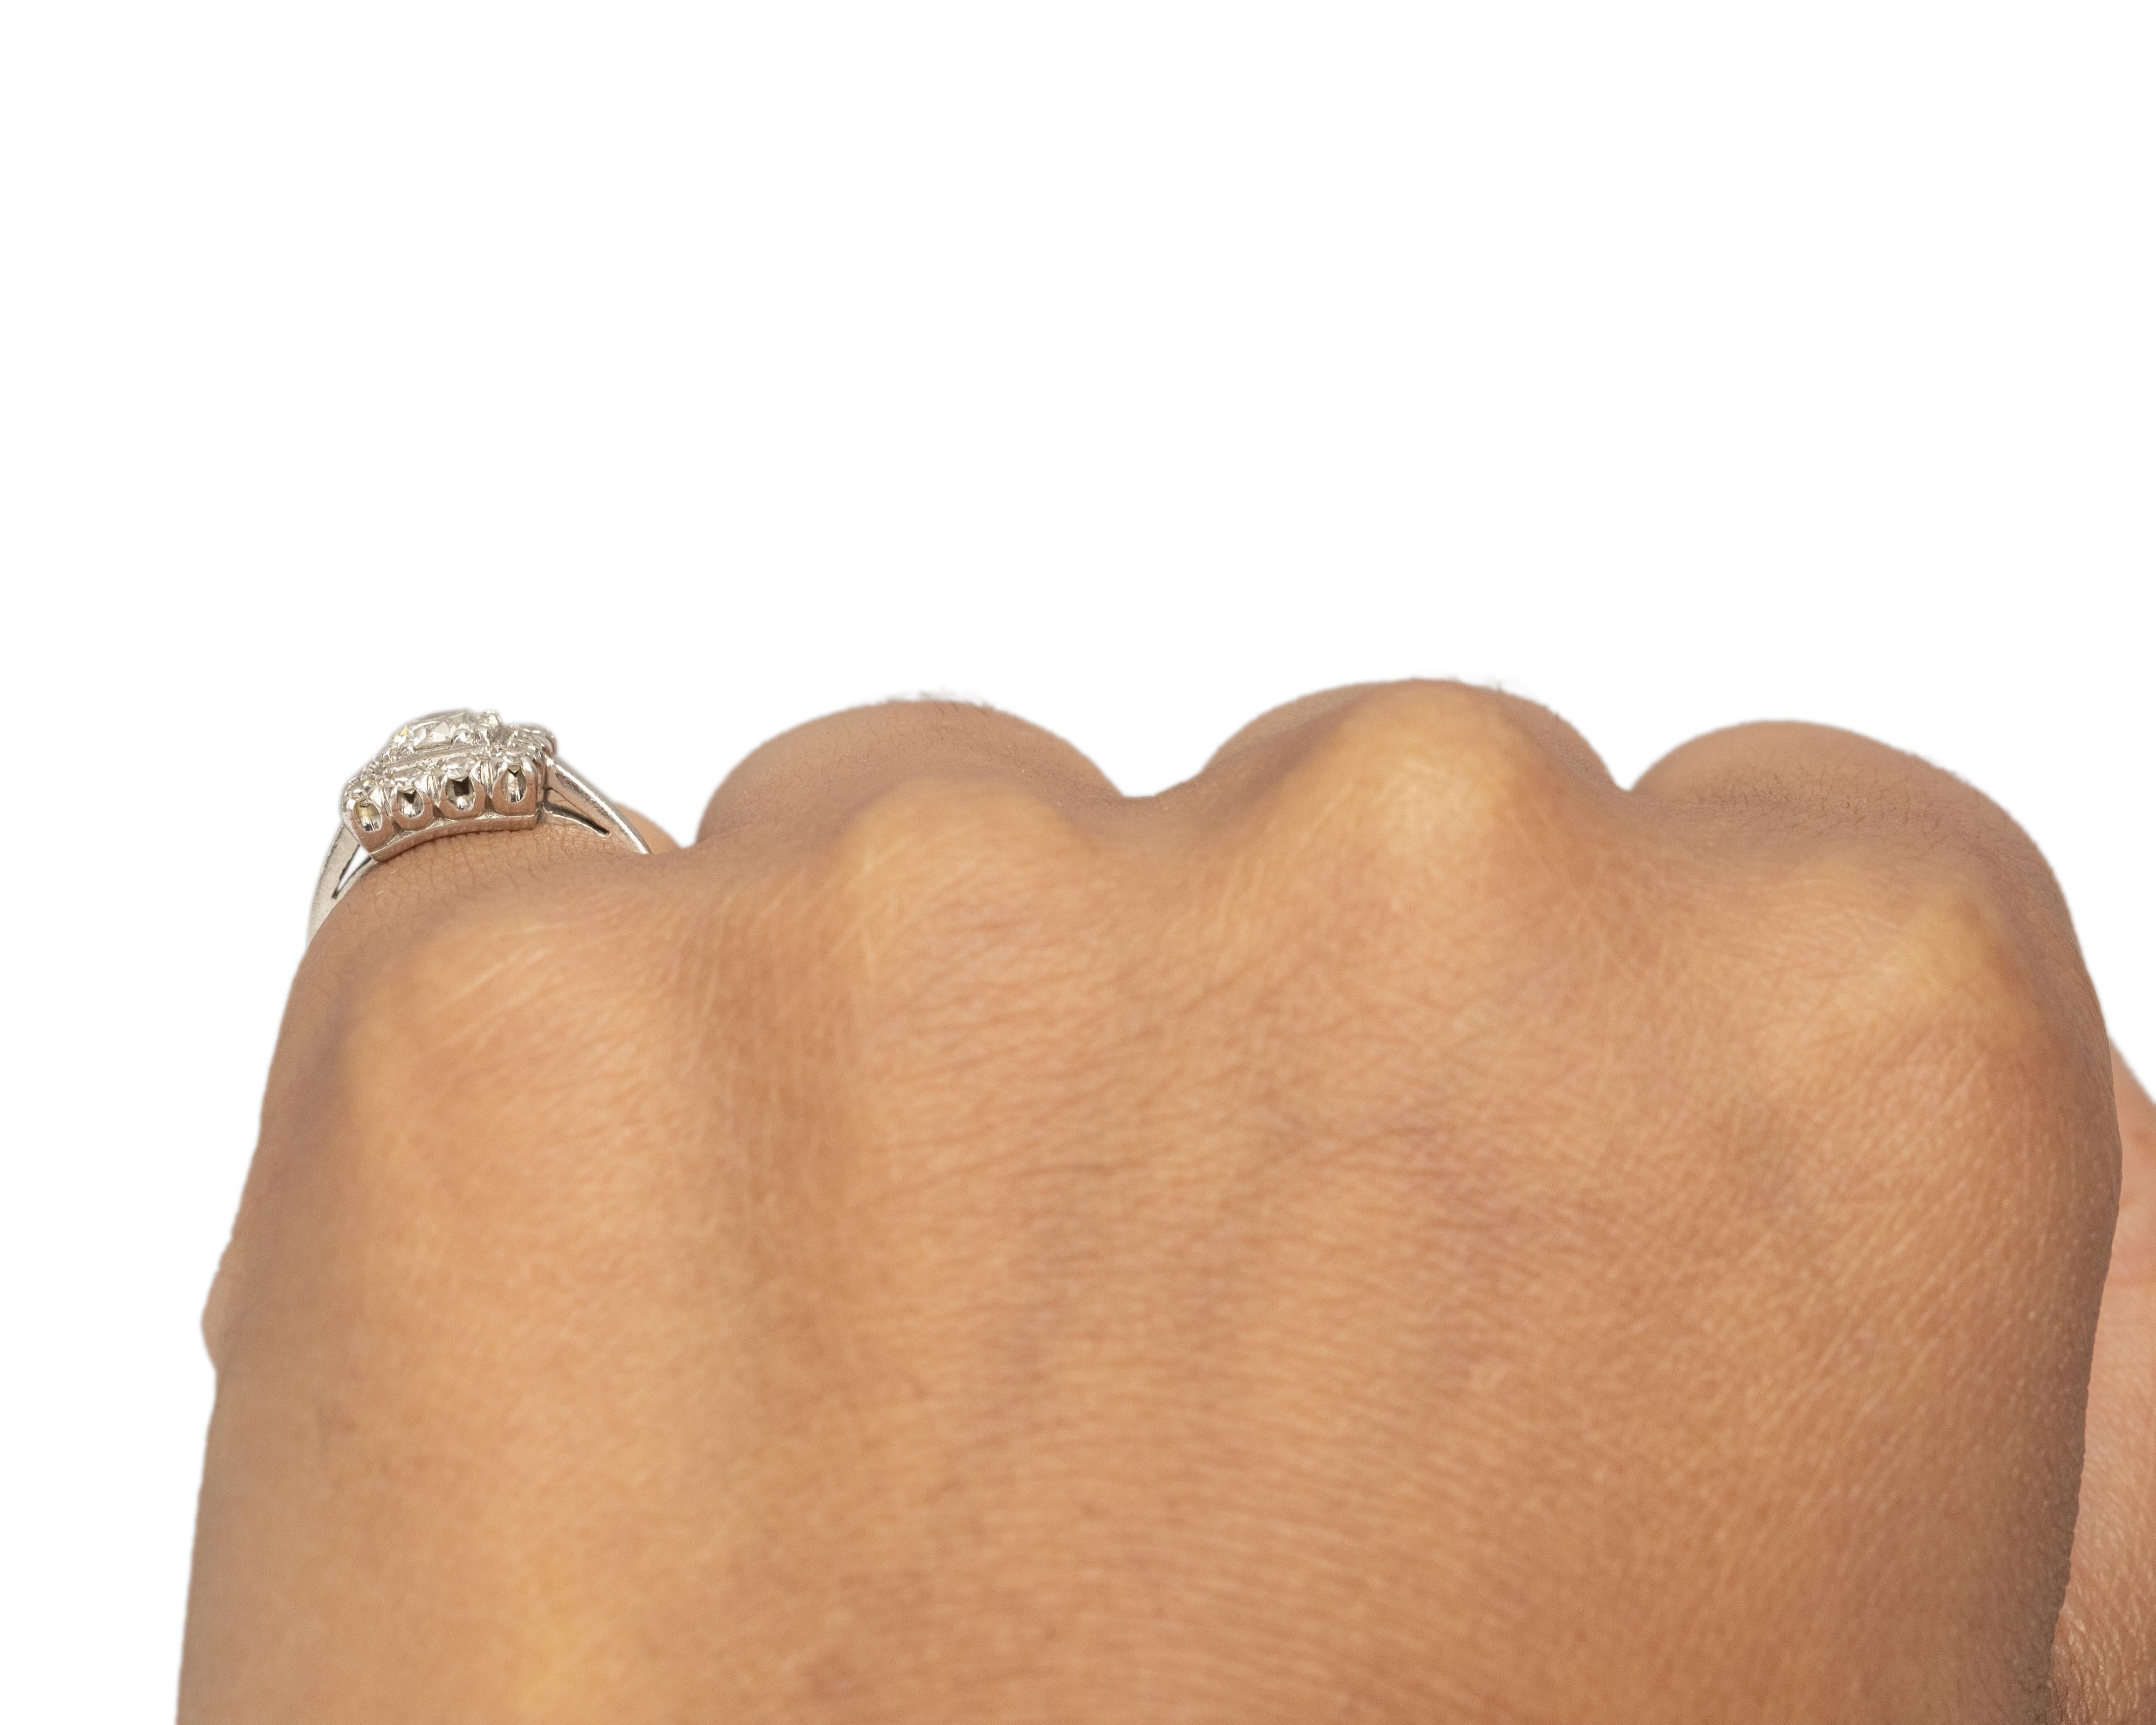 Old European Cut .30 Carat Art Deco Diamond Platinum Engagement Ring For Sale